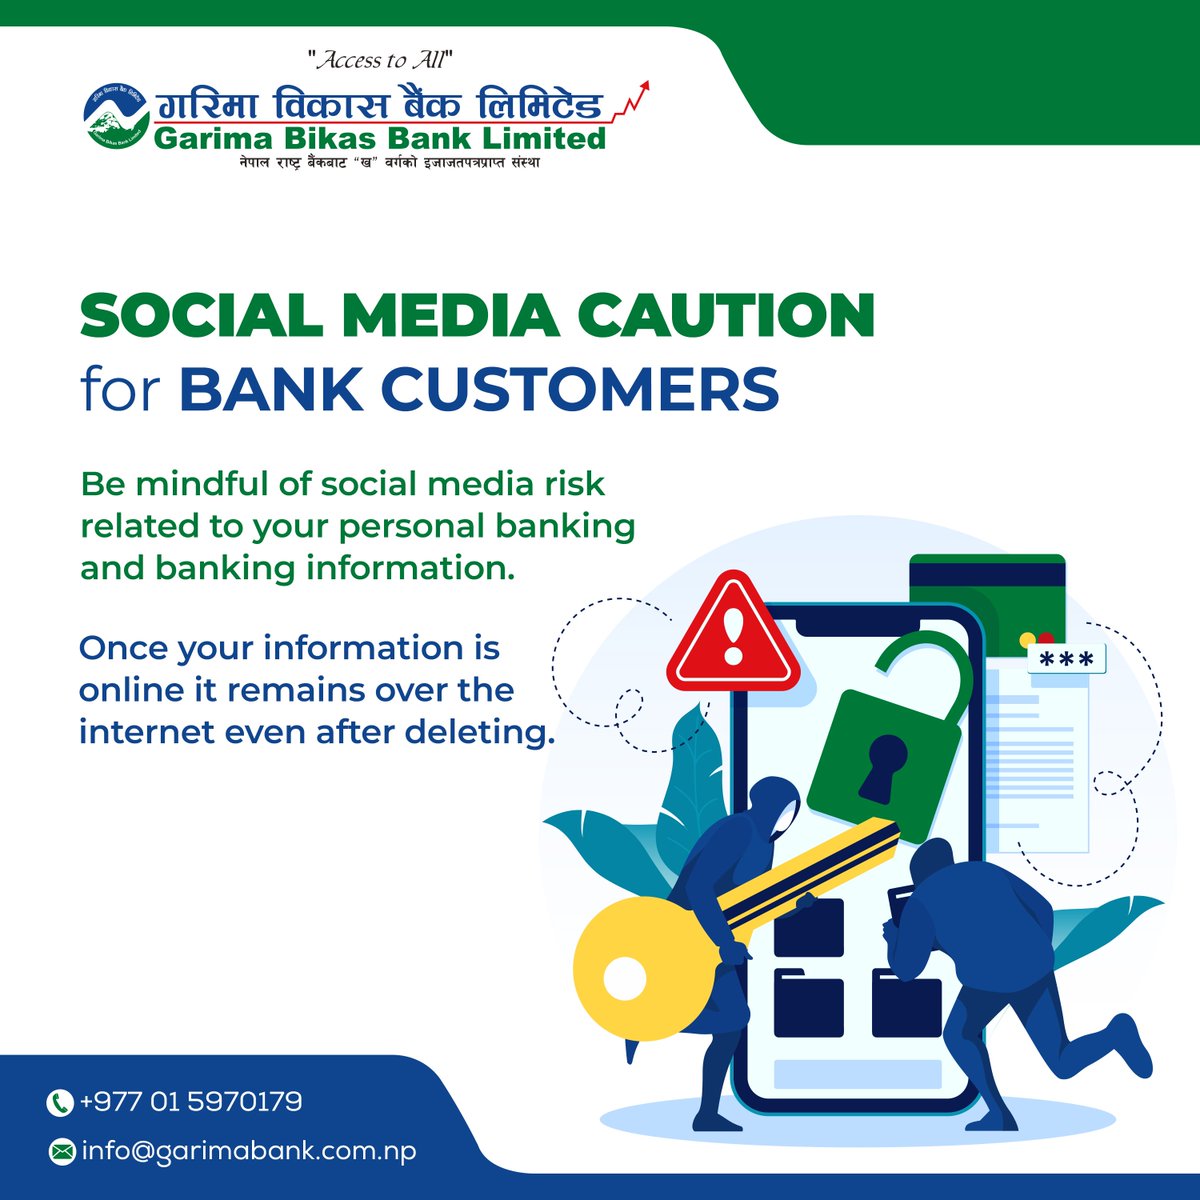 Be Mindful of Social Media Risk .
#Garimabikasbank
#AccessToAll
#safedigitalbanking
#savingfuture